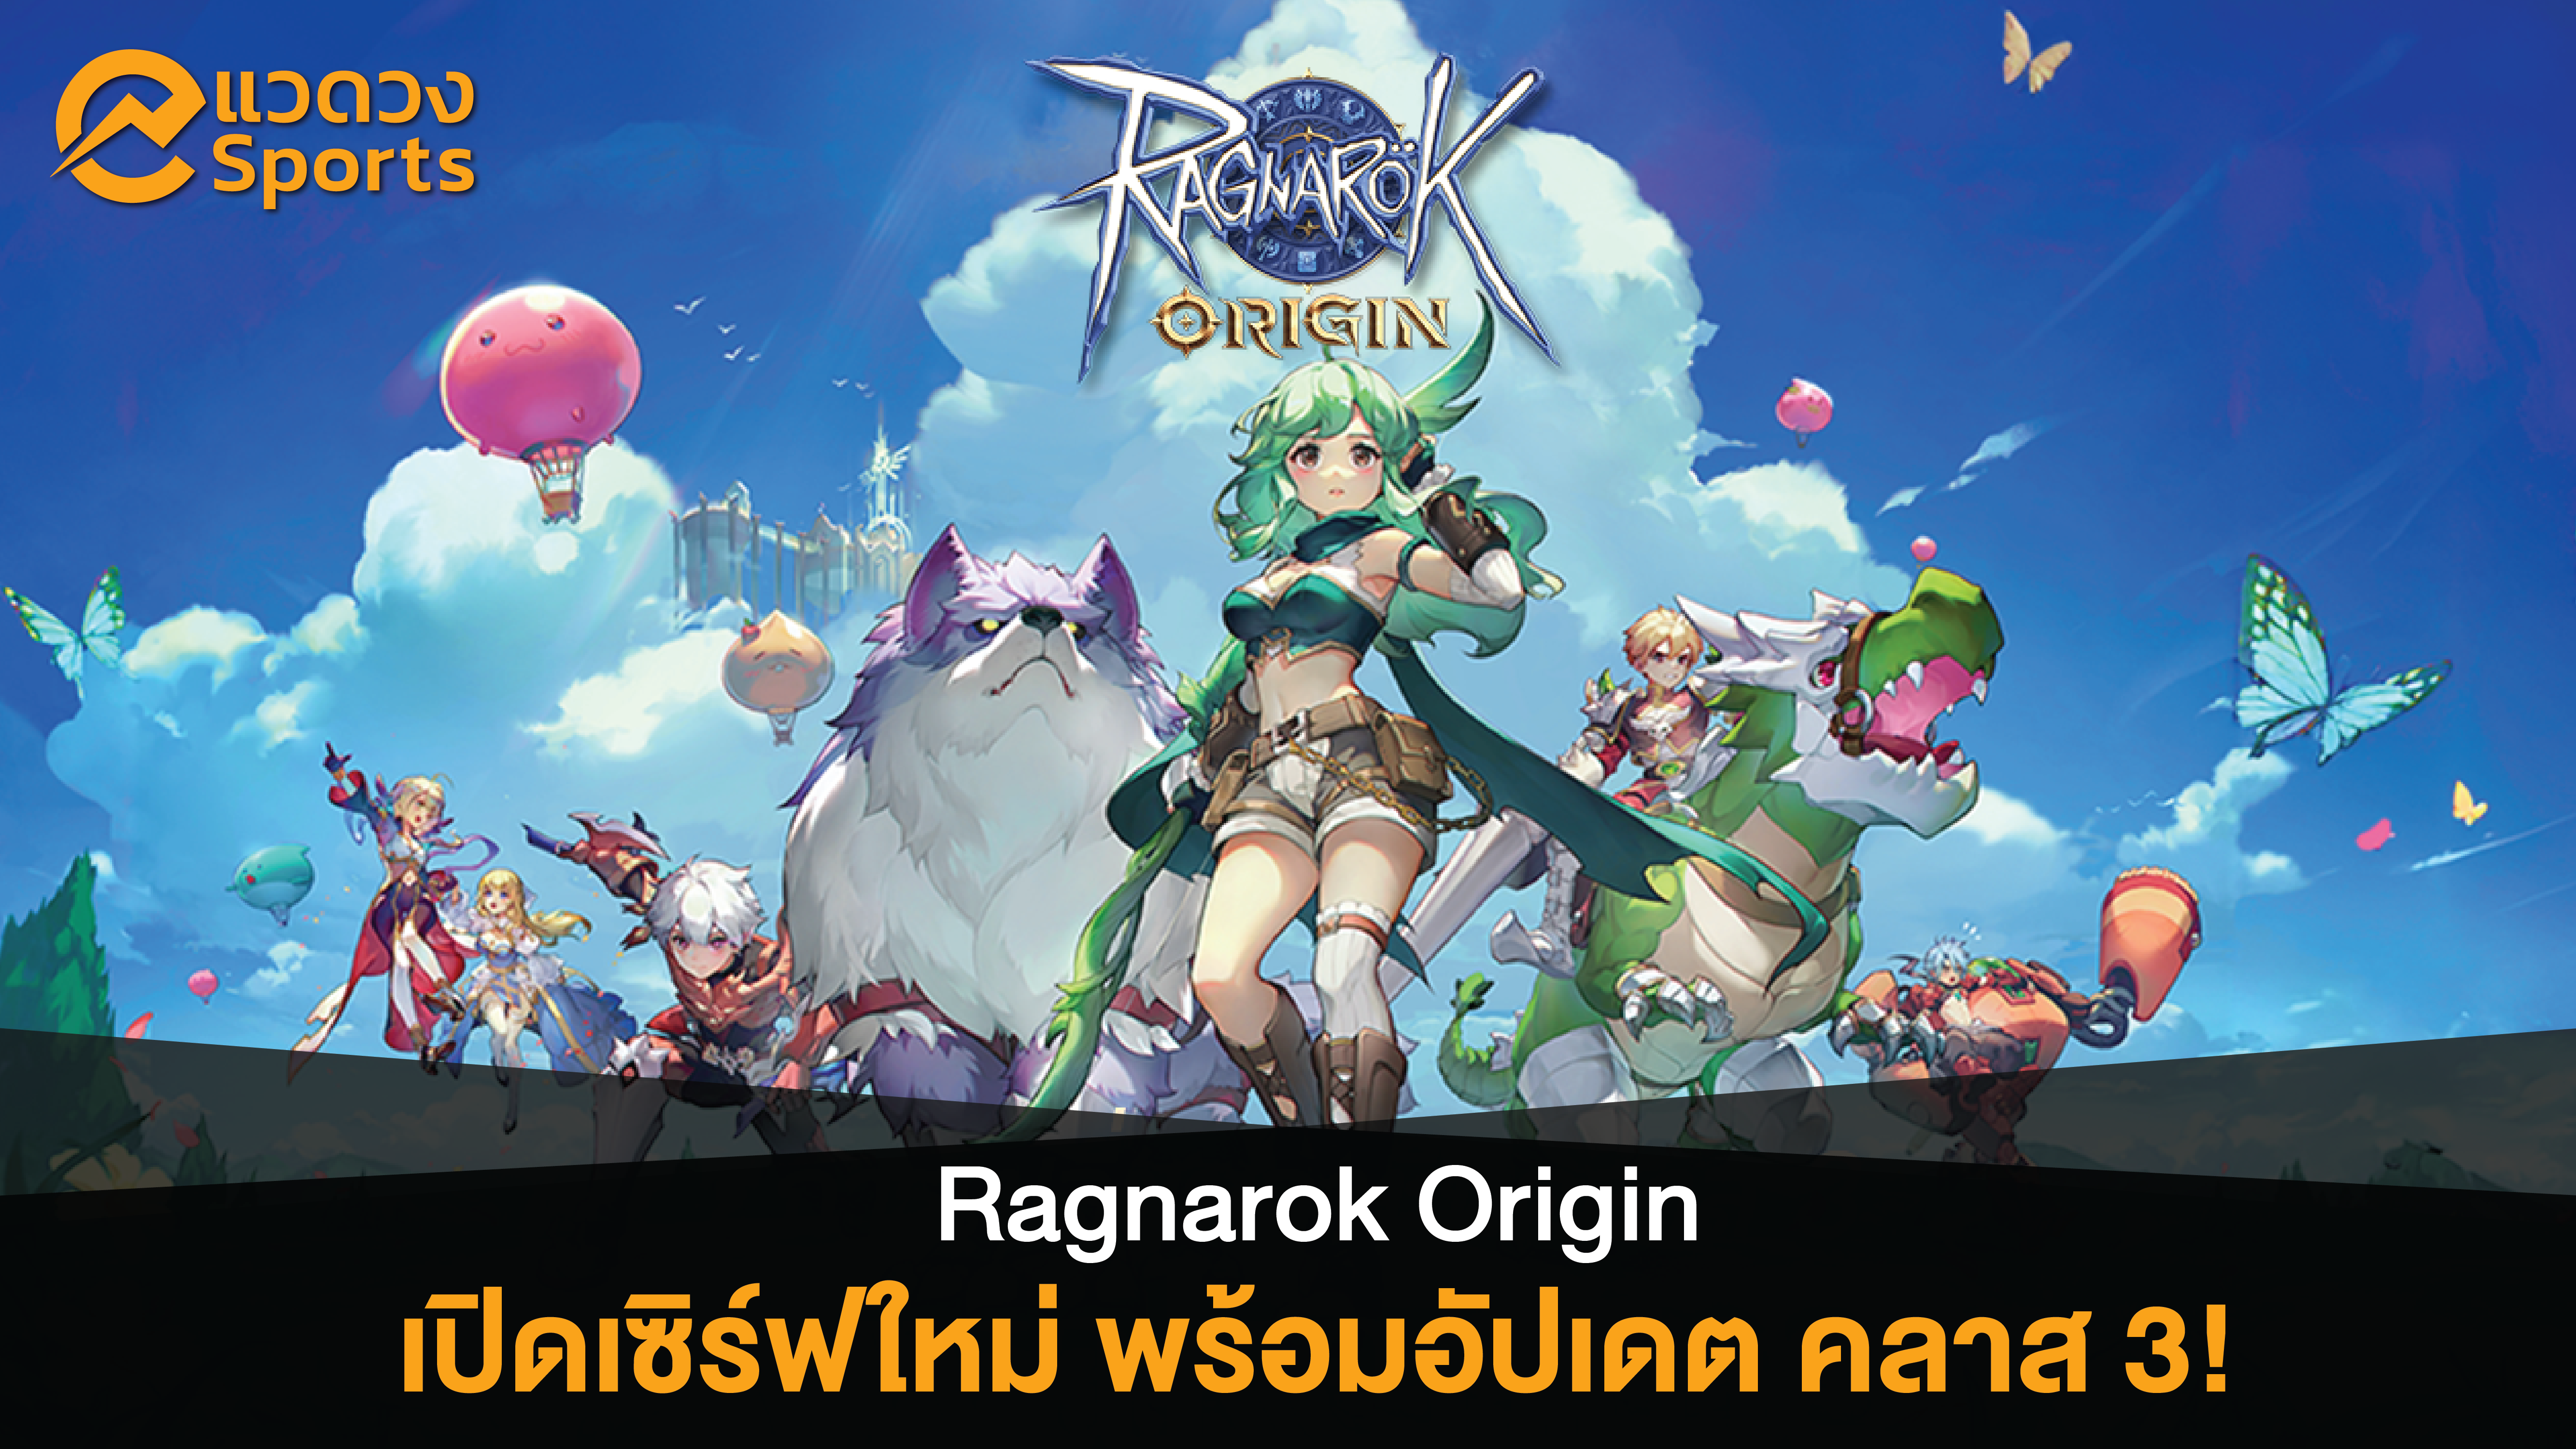 Ragnarok Origin อัปใหญ่ เพิ่มเซิร์ฟใหม่ เปิดคลาส 3 และ แจกสัตว์เลือกลิมิเต็ด!